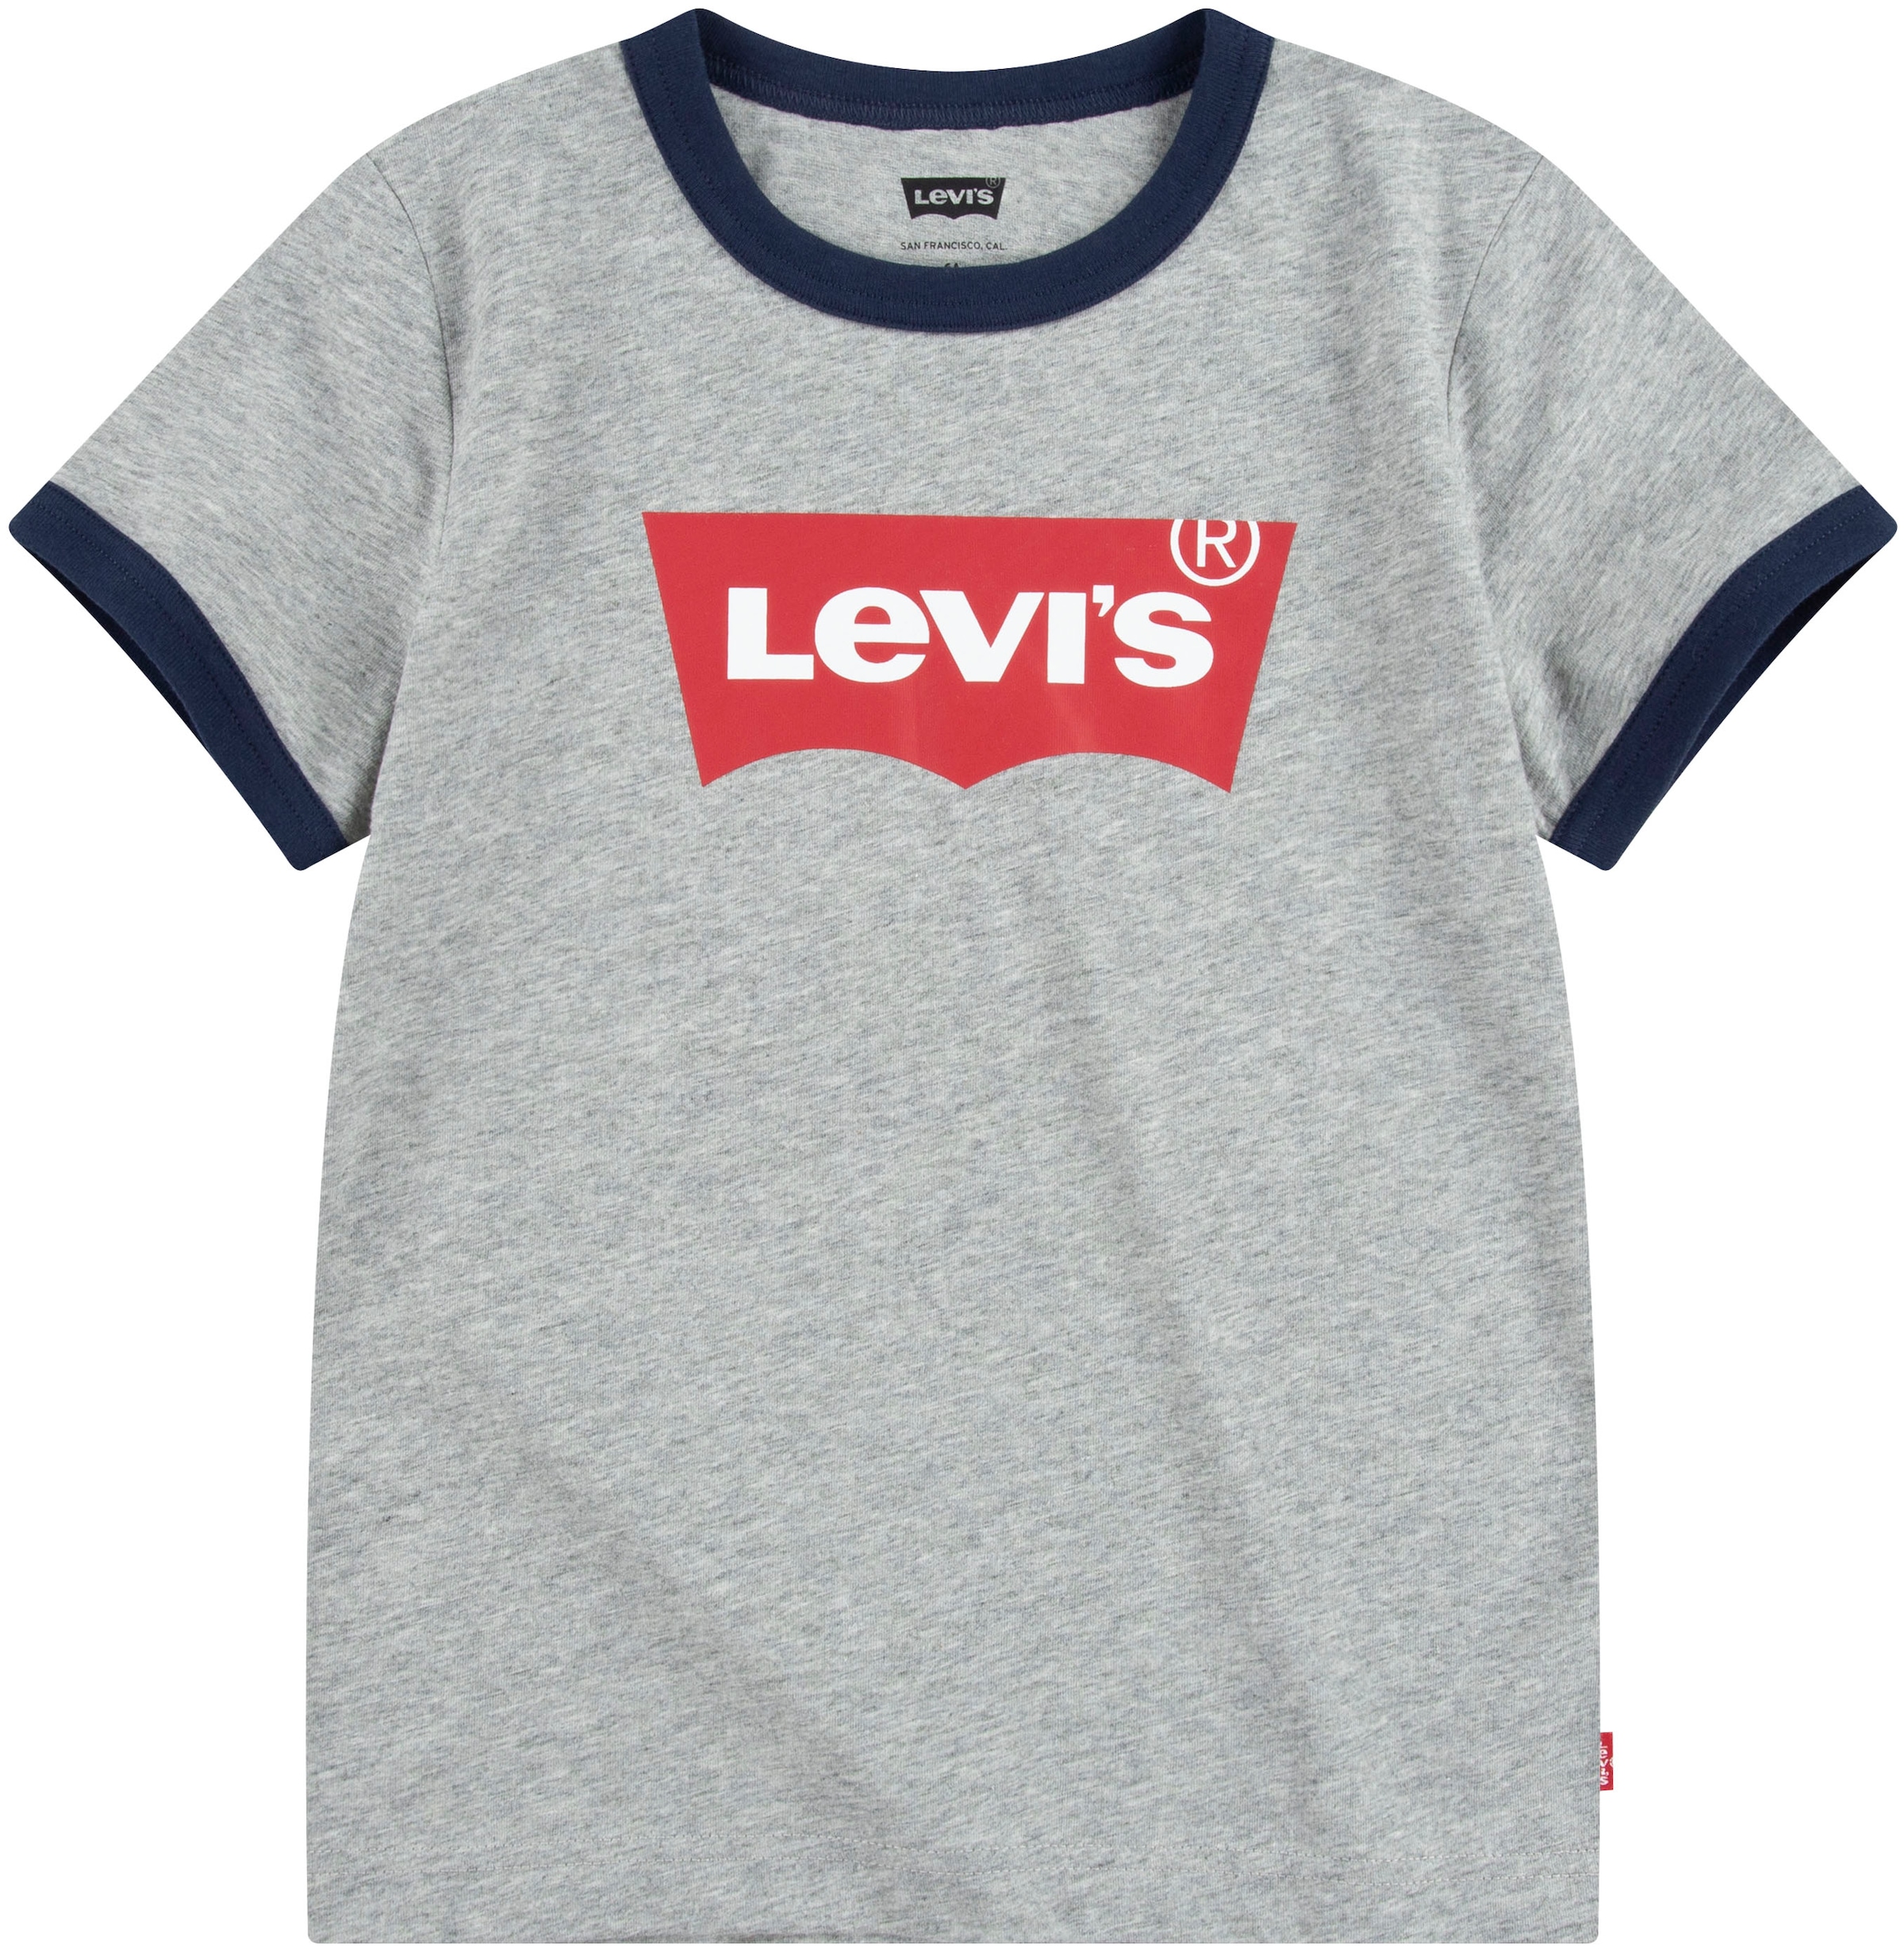 buy levis t shirt online